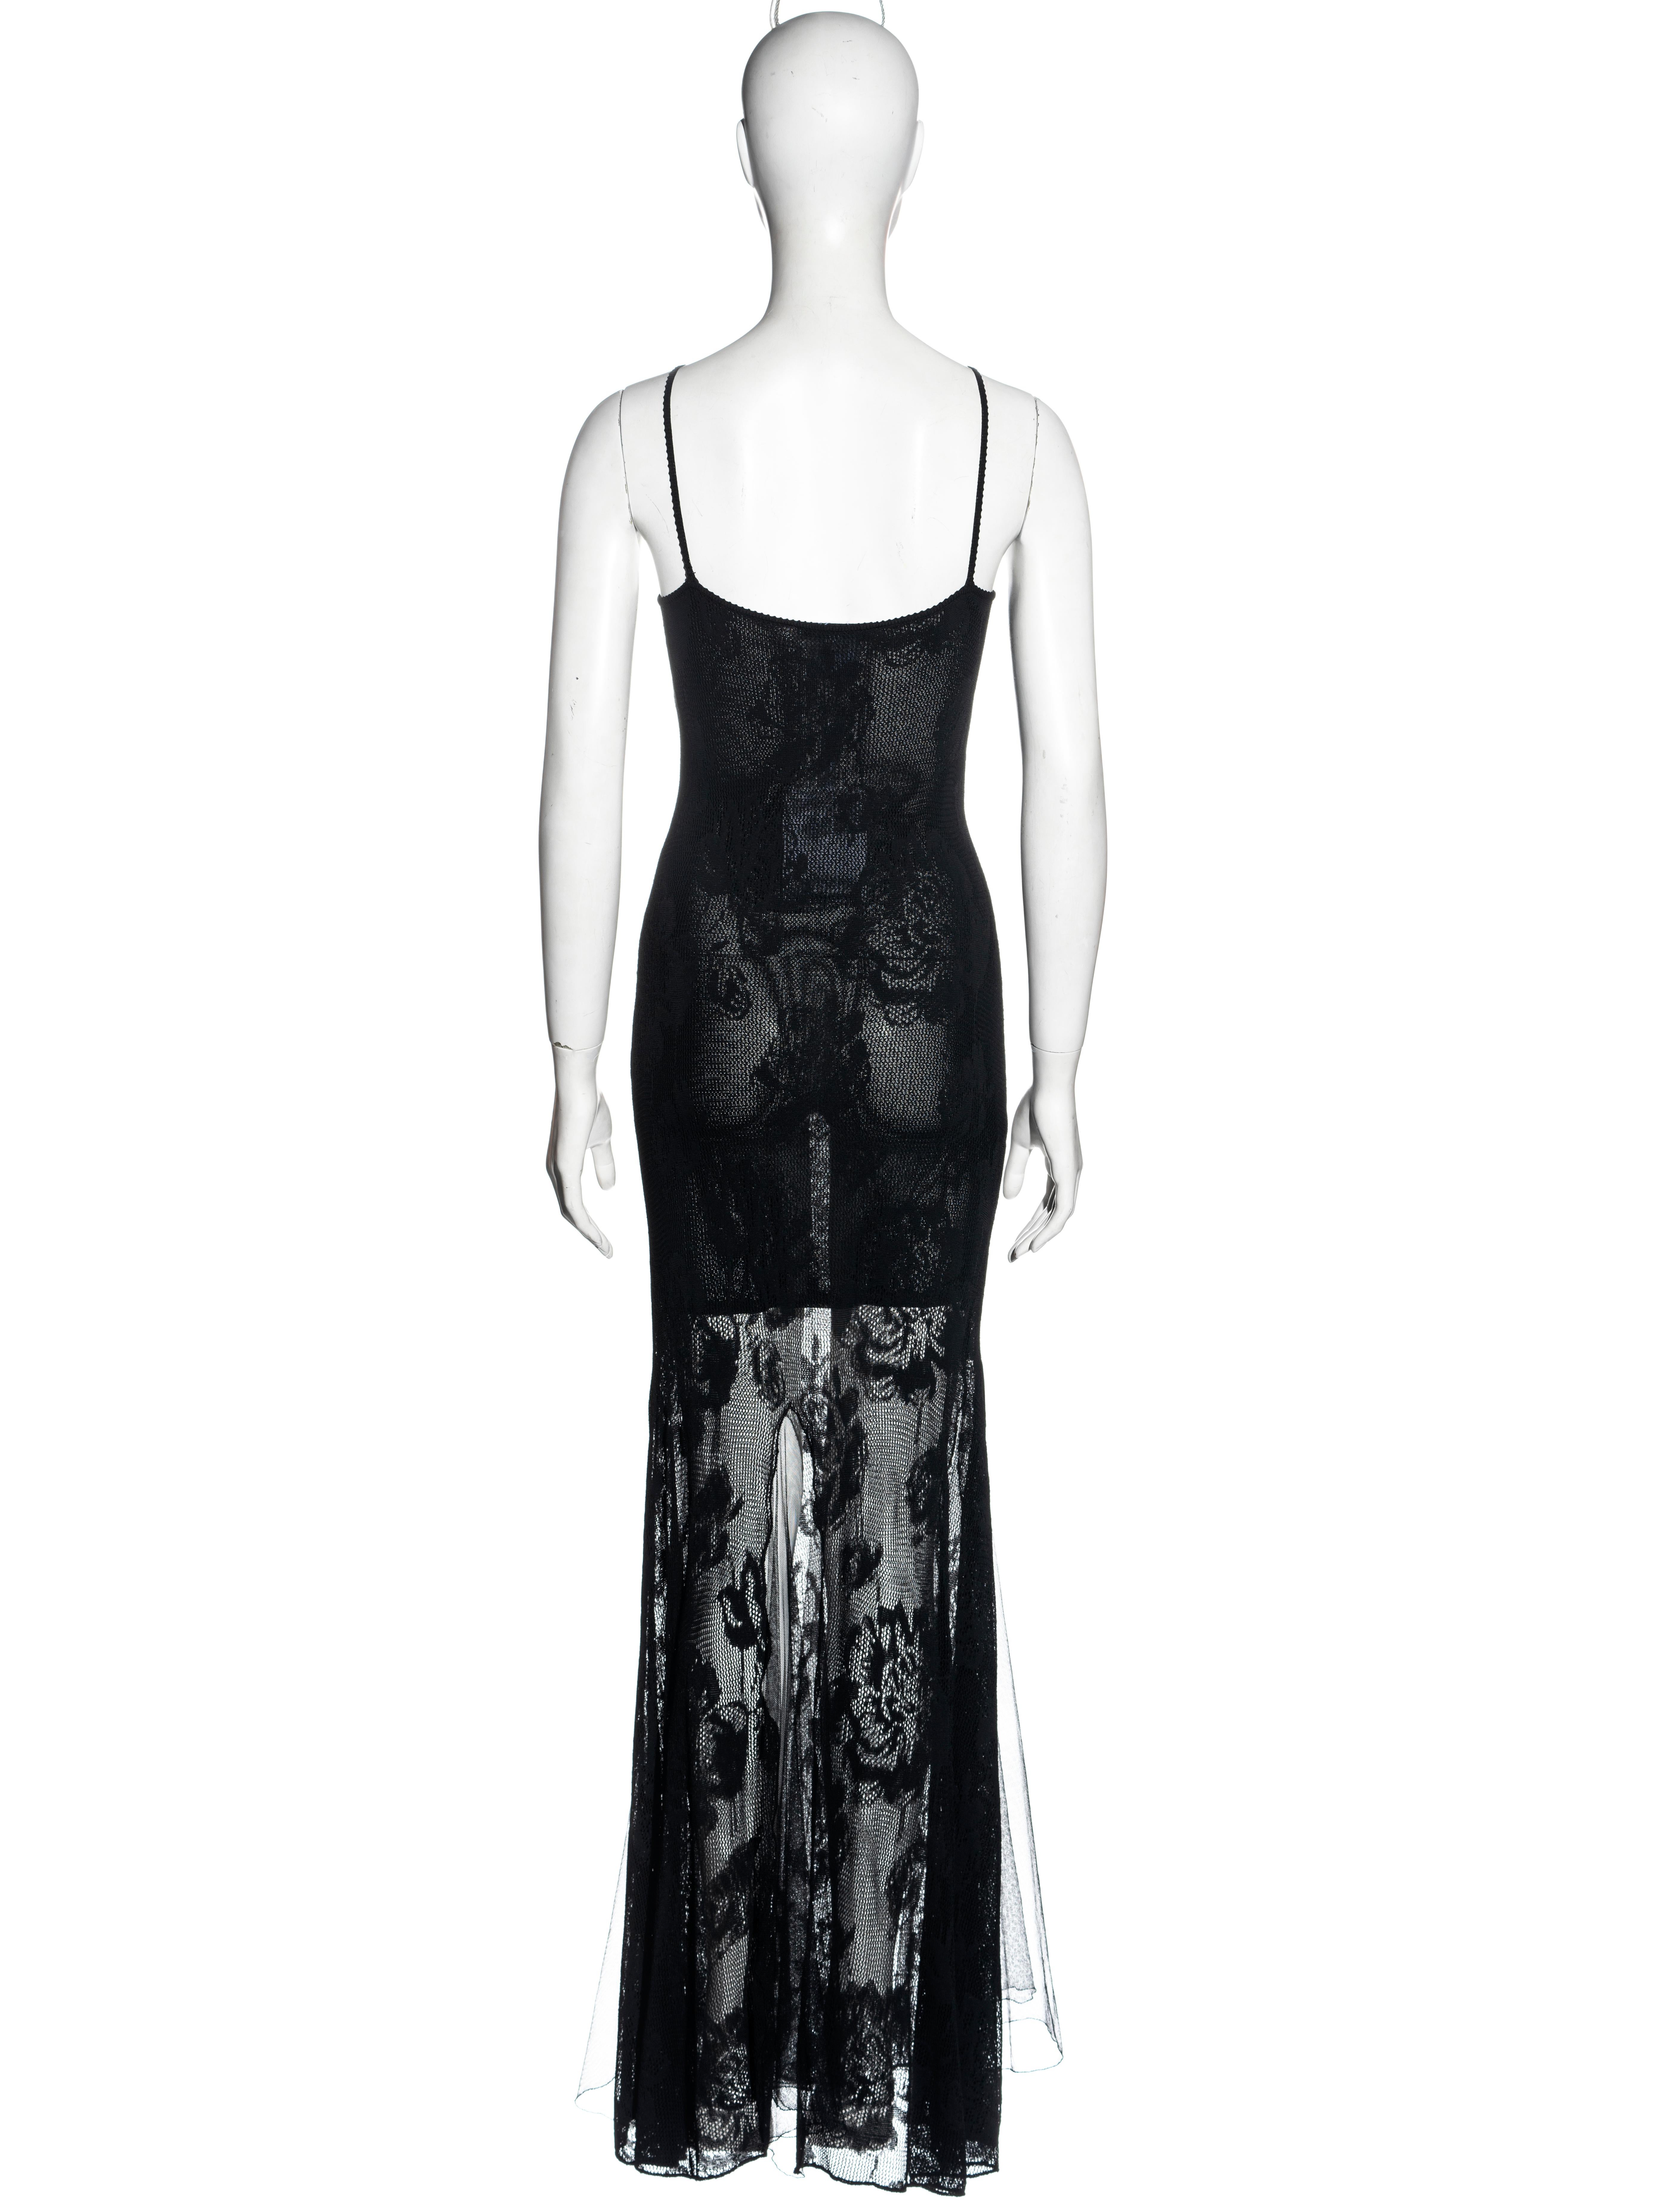 Christian Dior by John Galliano black viscose knit lace evening dress, ss 2002 3